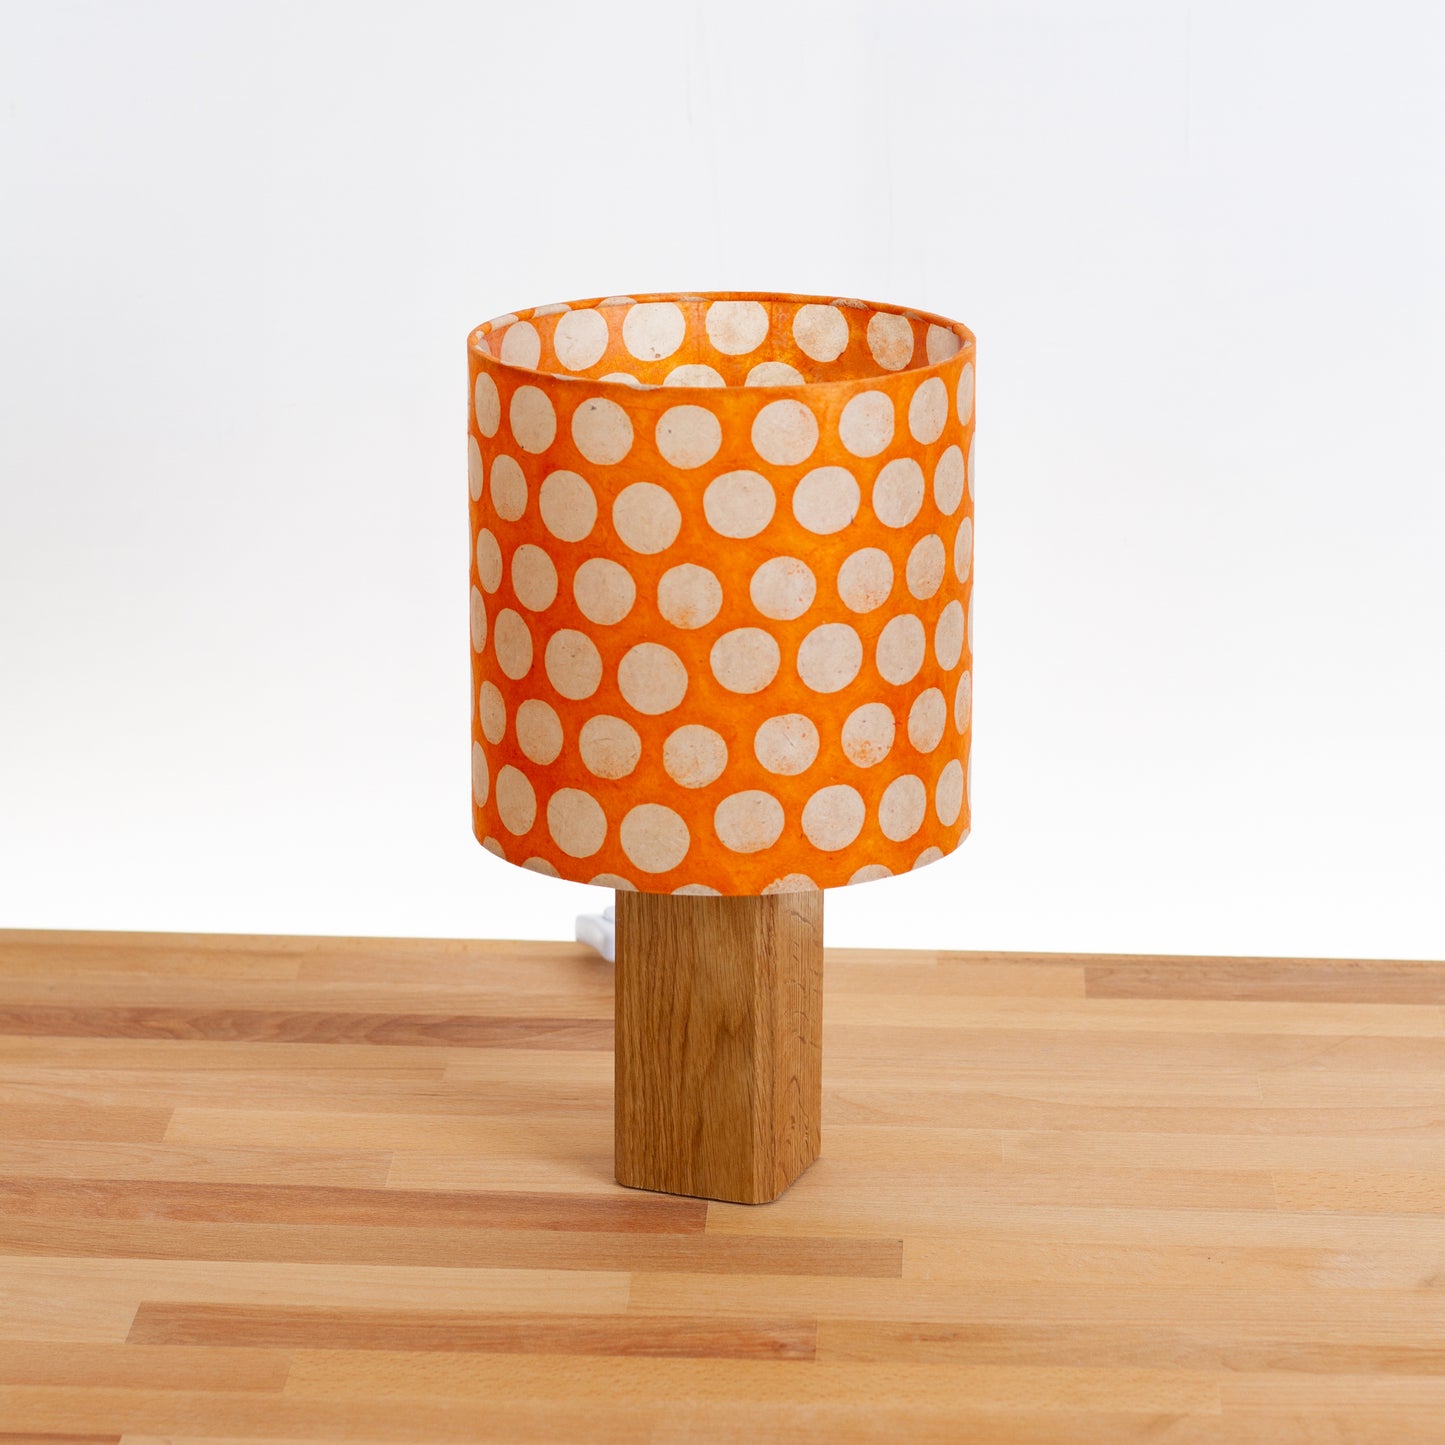 Square Oak Table Lamp with 20cm Drum Lamp Shade B110 ~ Batik Dots on Orange